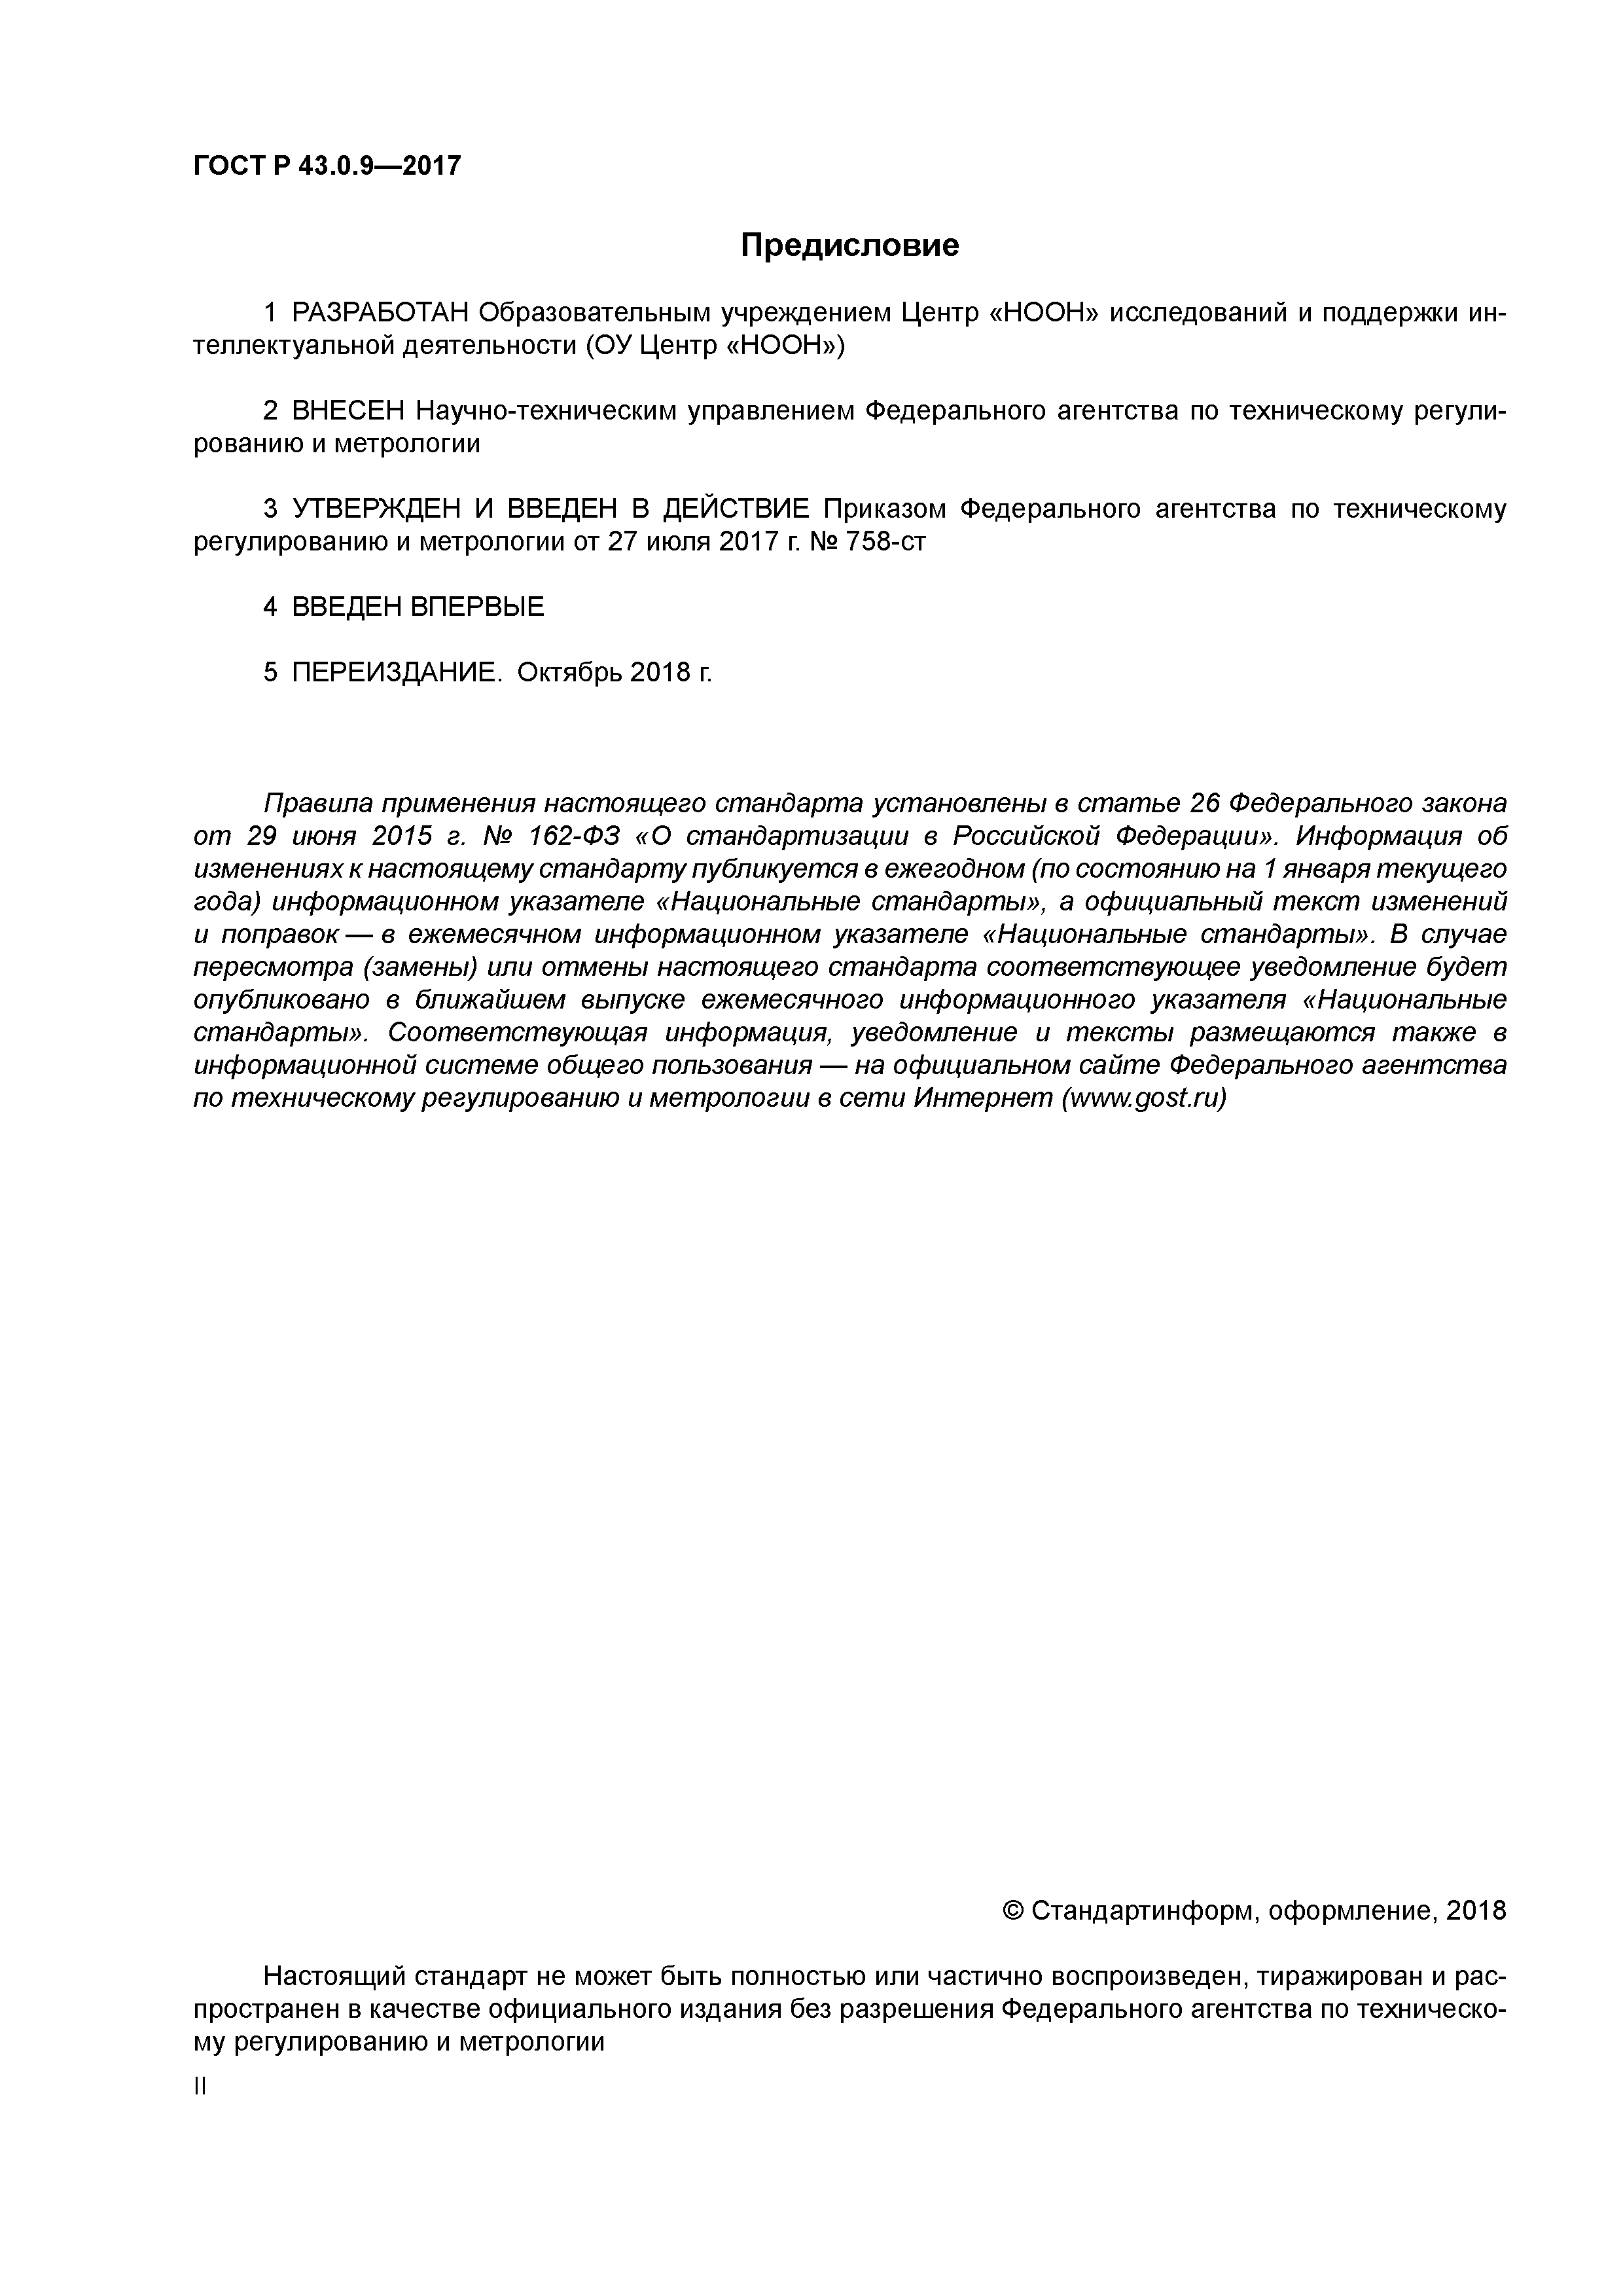 ГОСТ Р 43.0.9-2017